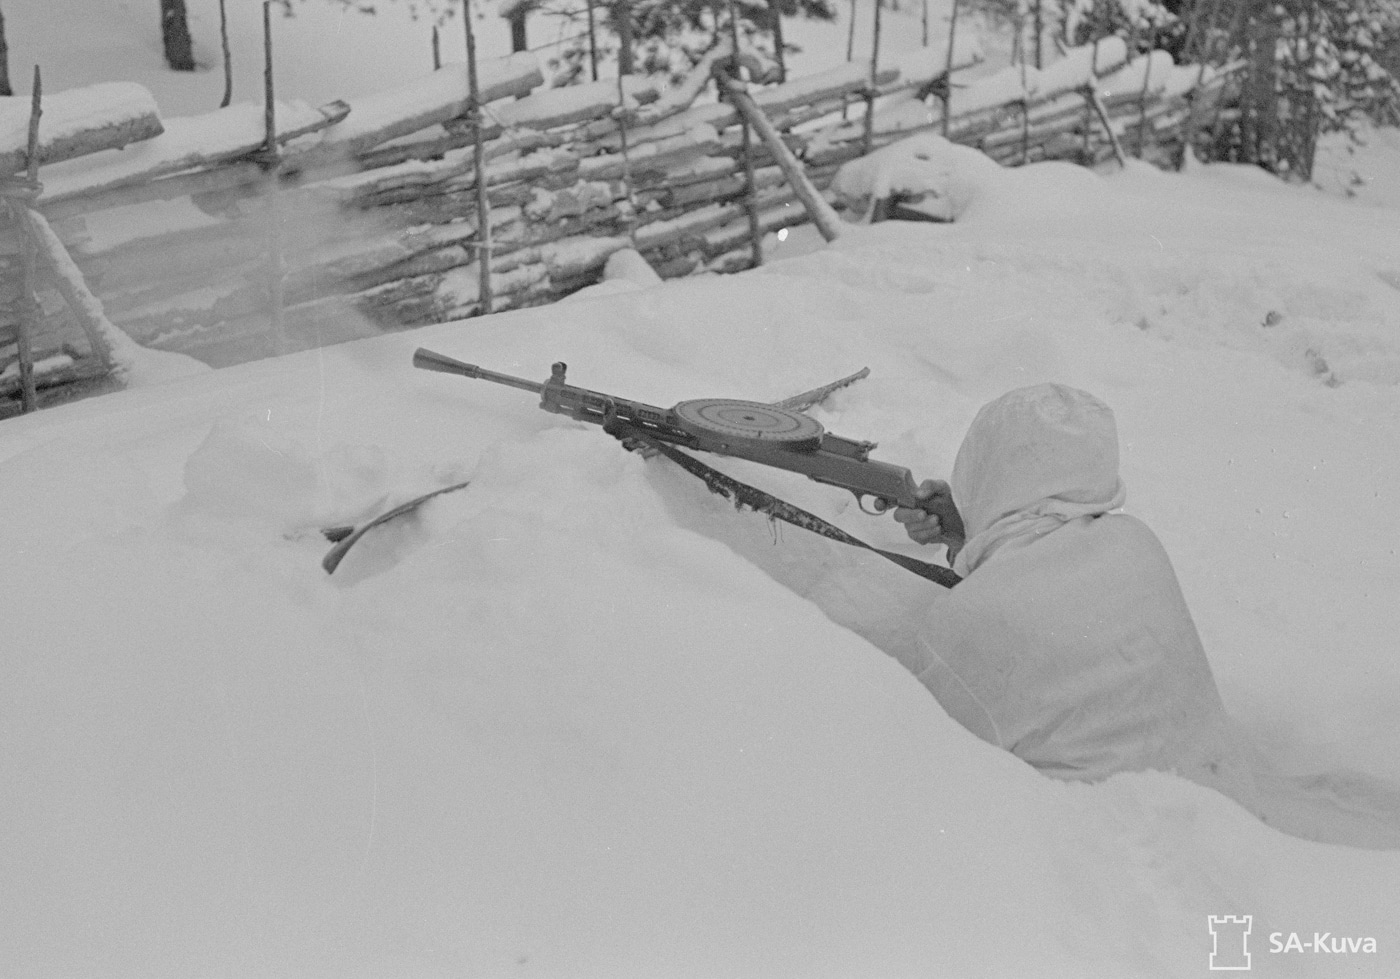 finnish soldier fires dp-27 machine gun in the snow captured from ussr troops in winter war